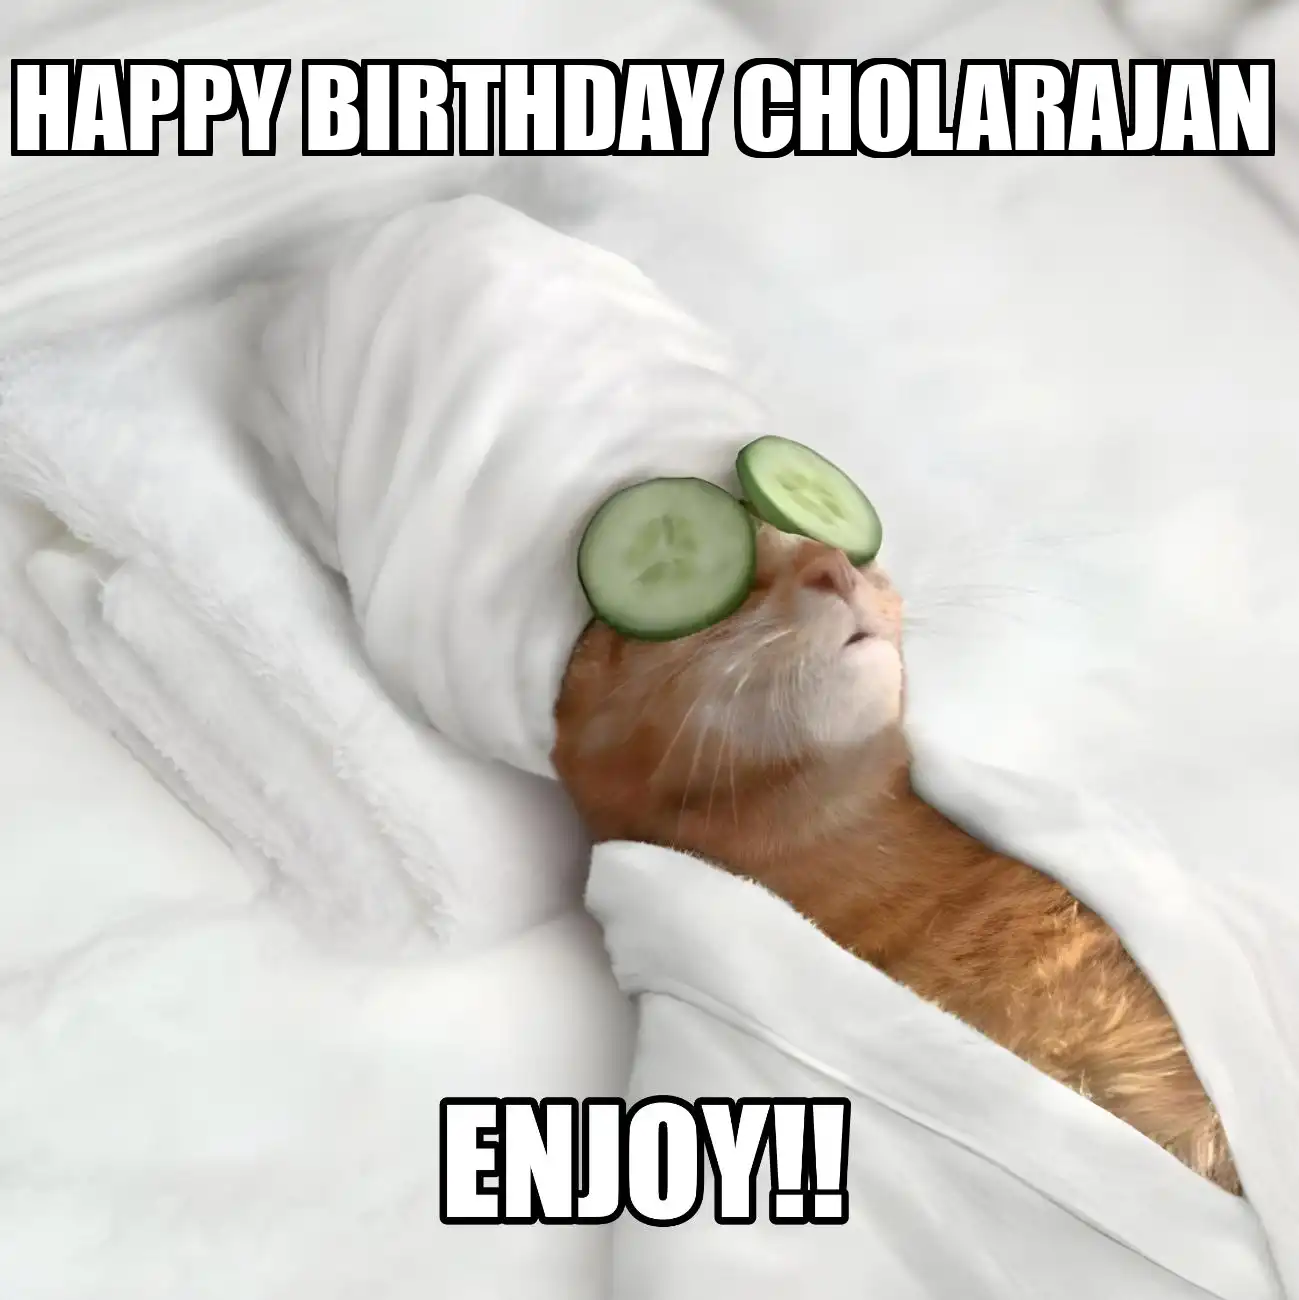 Happy Birthday Cholarajan Enjoy Cat Meme